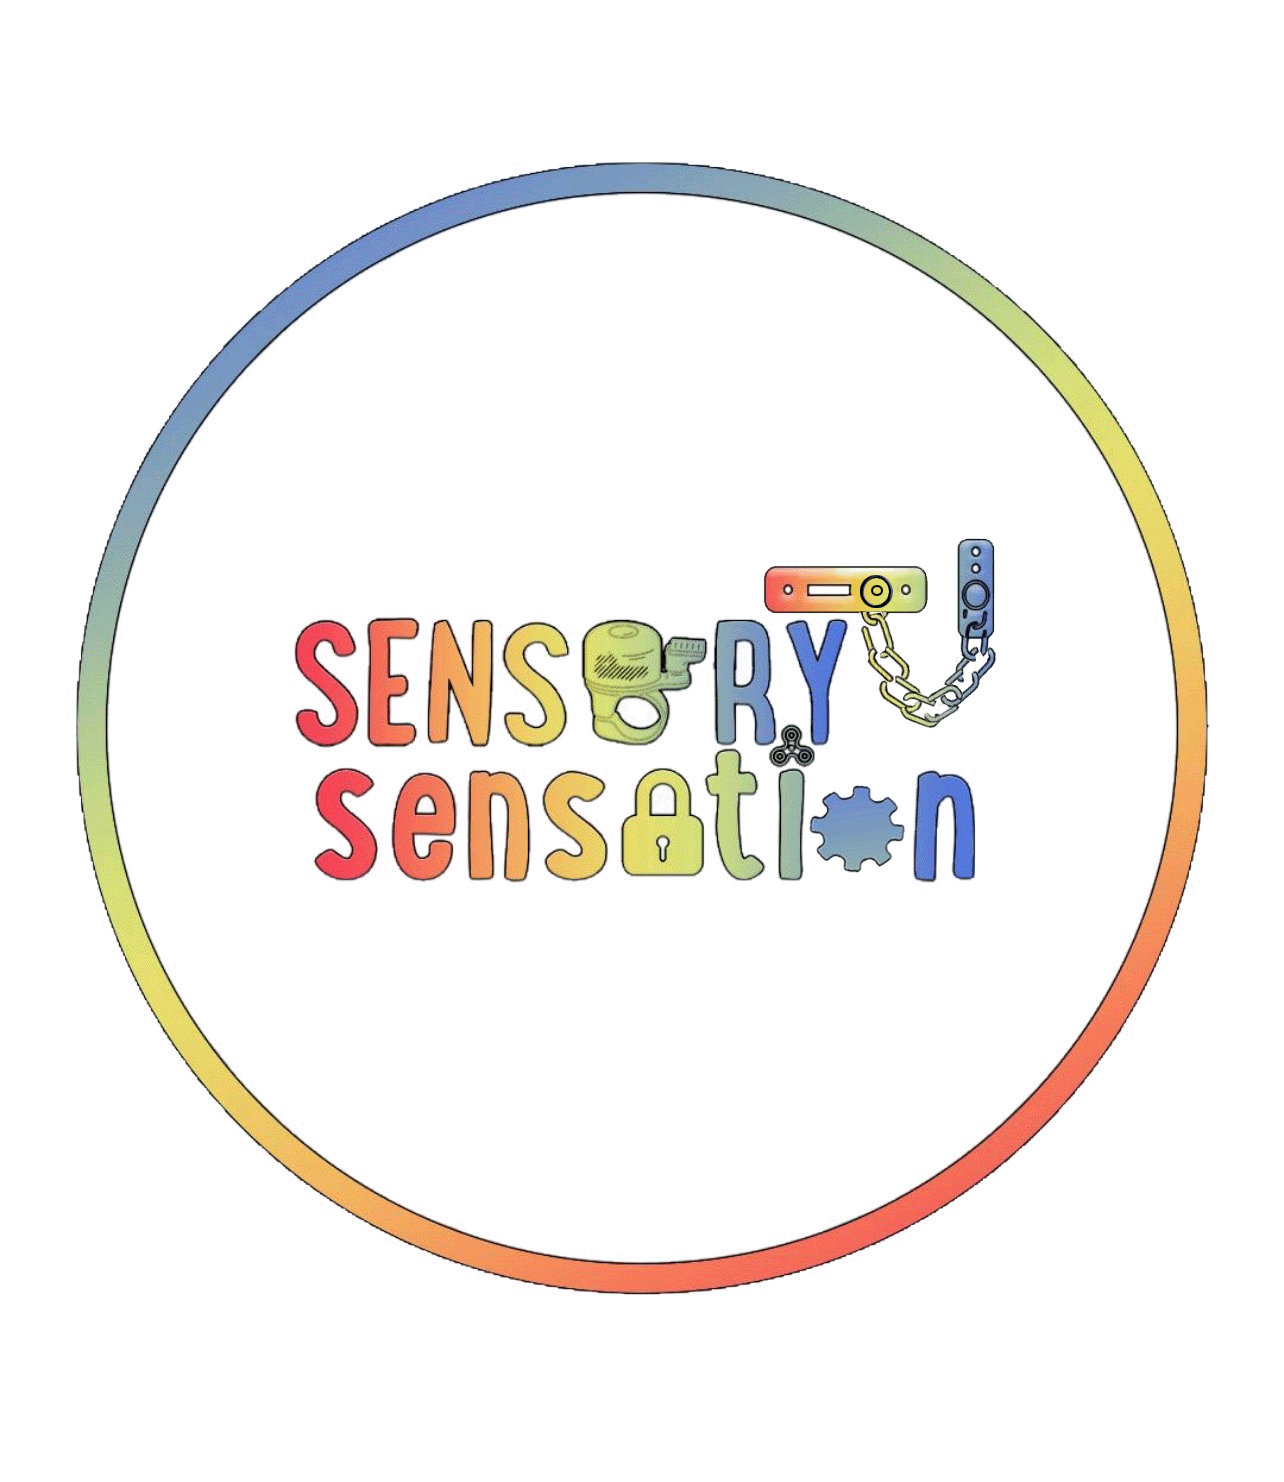 Sensory sensation